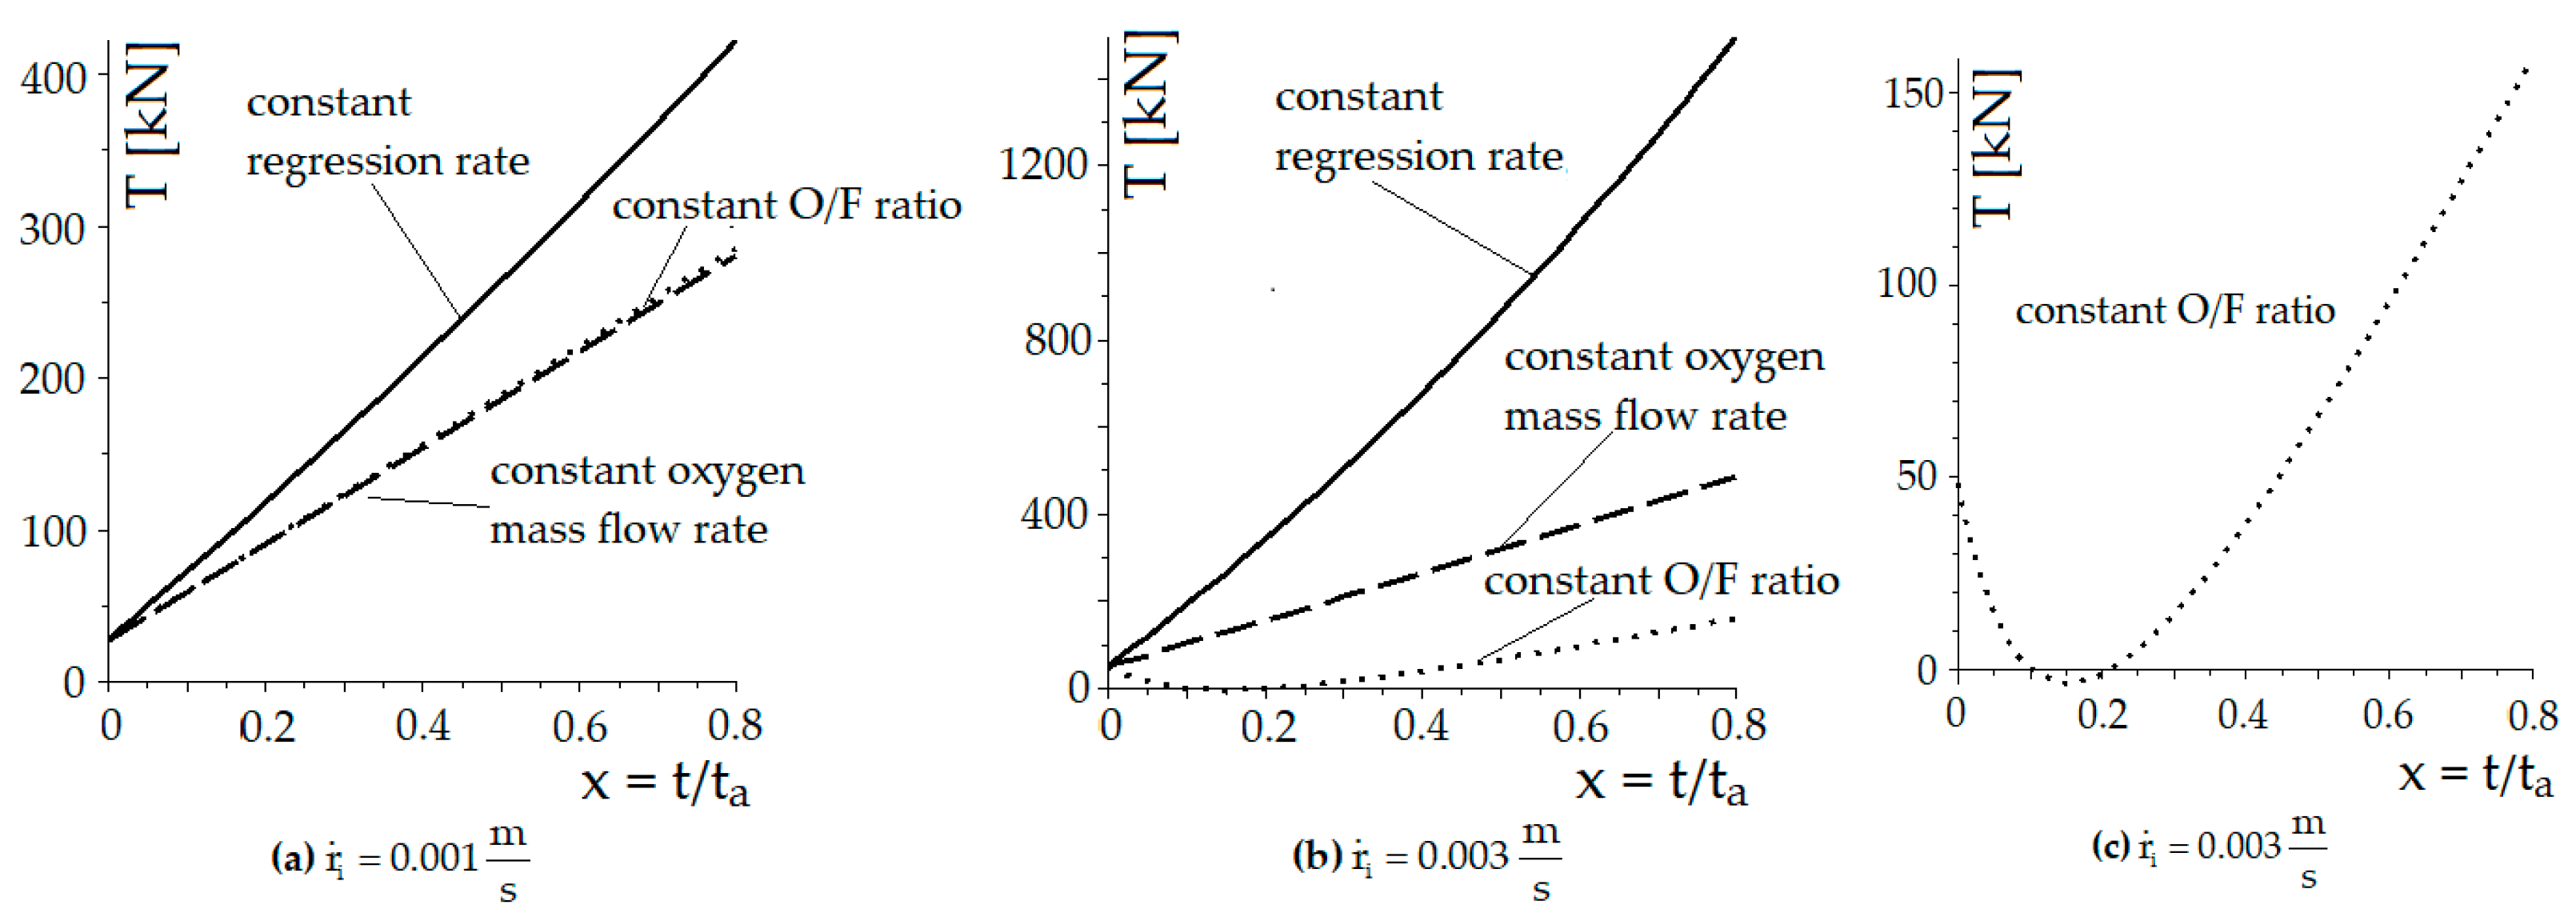 PDF) Transient simulation of regression rate on thrust regulation process  in hybrid rocket motor